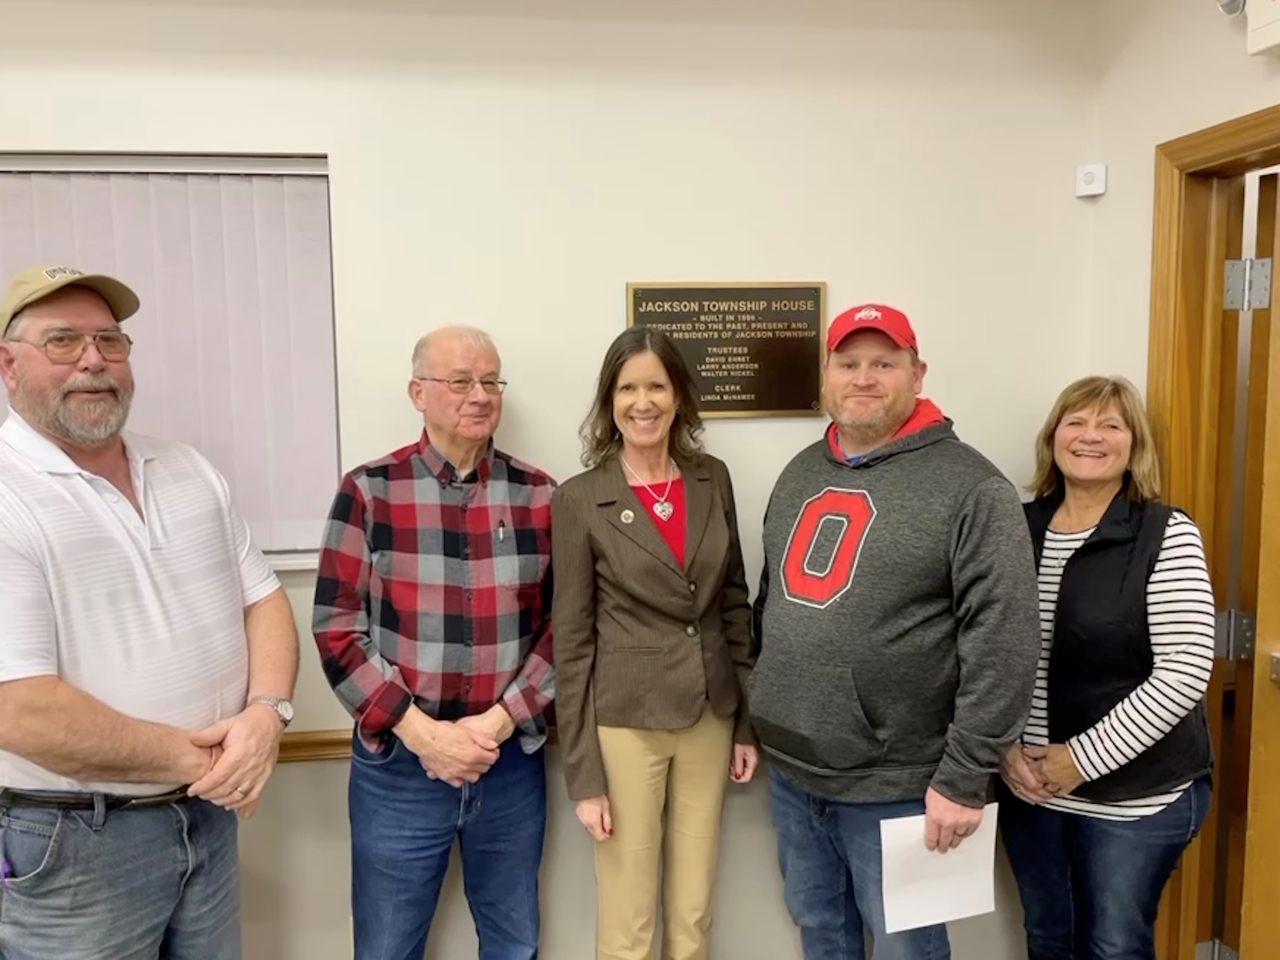 Representative Richardson recently enjoyed reconnecting with the dedicated Jackson Township Trustees.